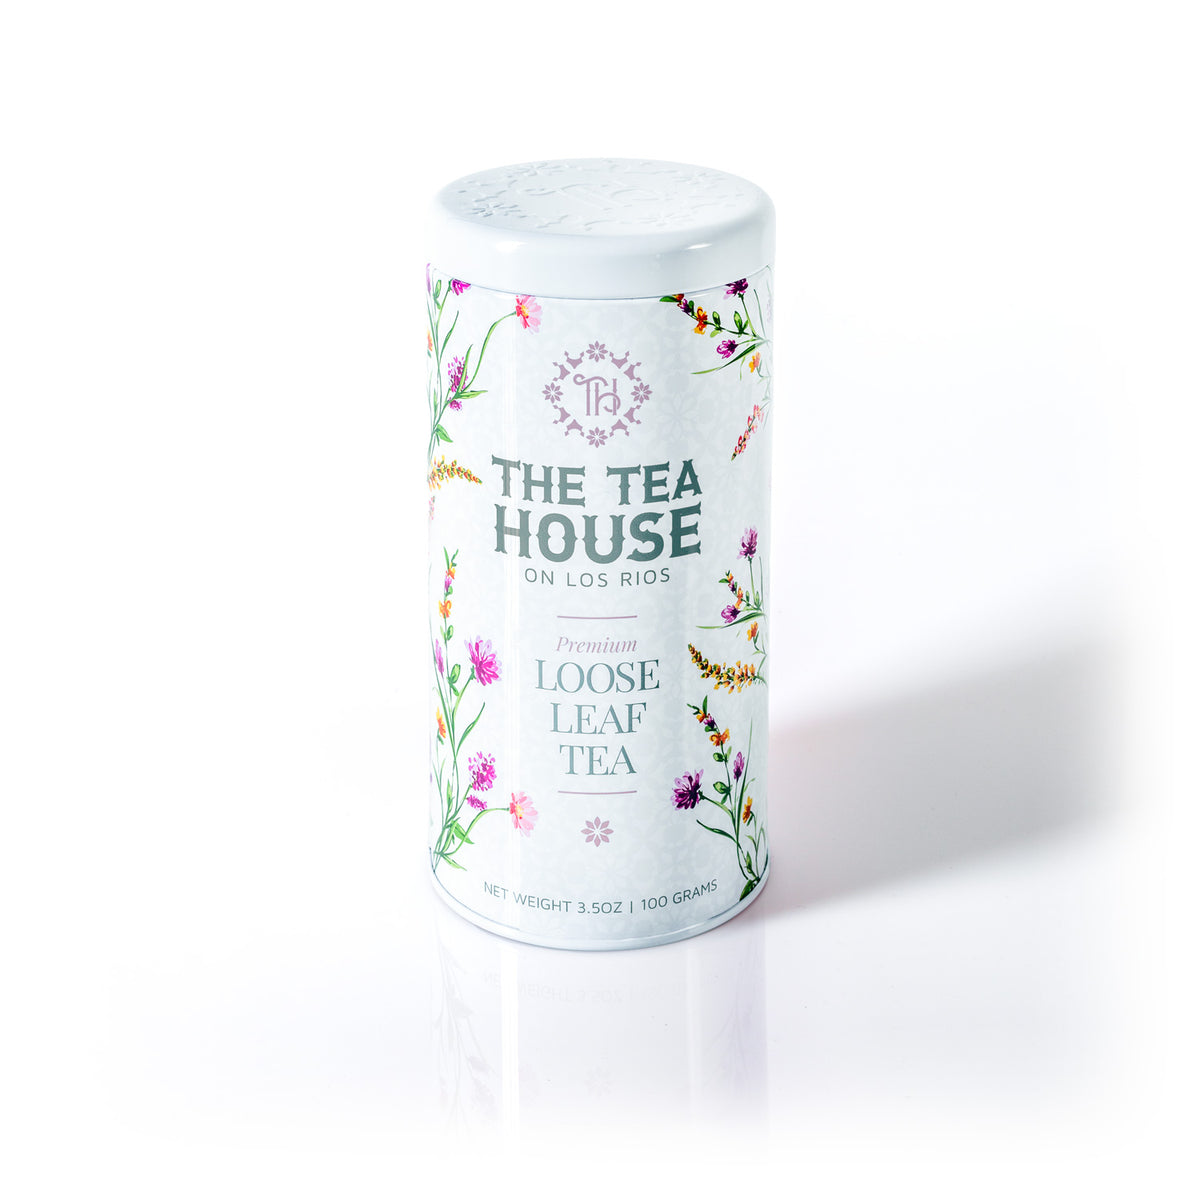 The Tea House on Los Rios Tea Tin with 100g of Loose Leaf